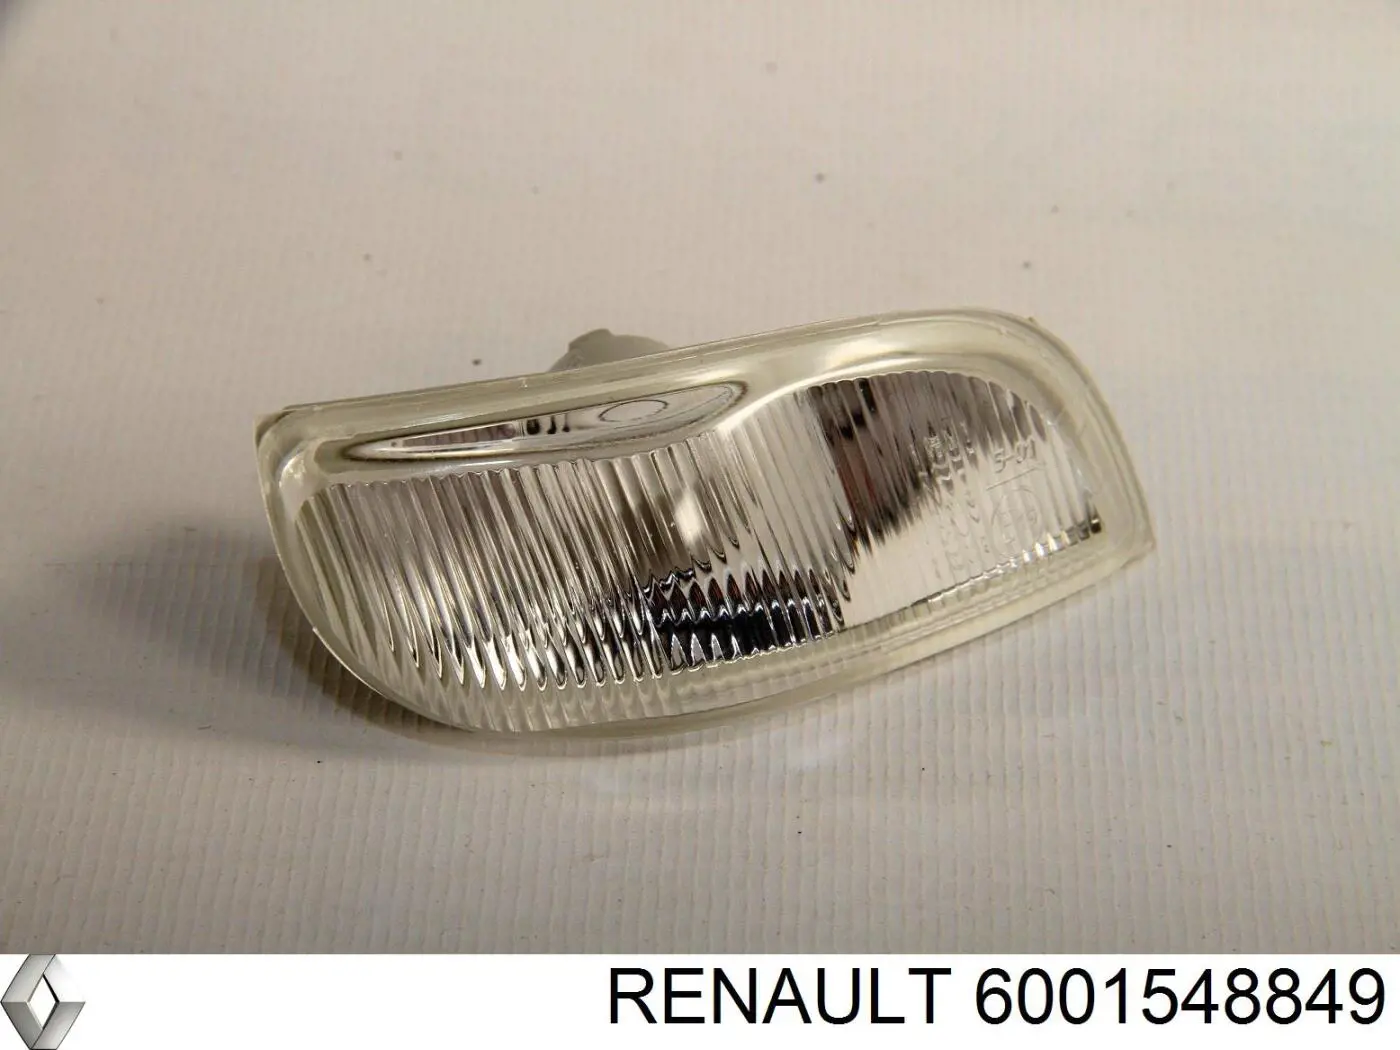 6001548849 Renault (RVI) arco de rueda, panel lateral, izquierdo